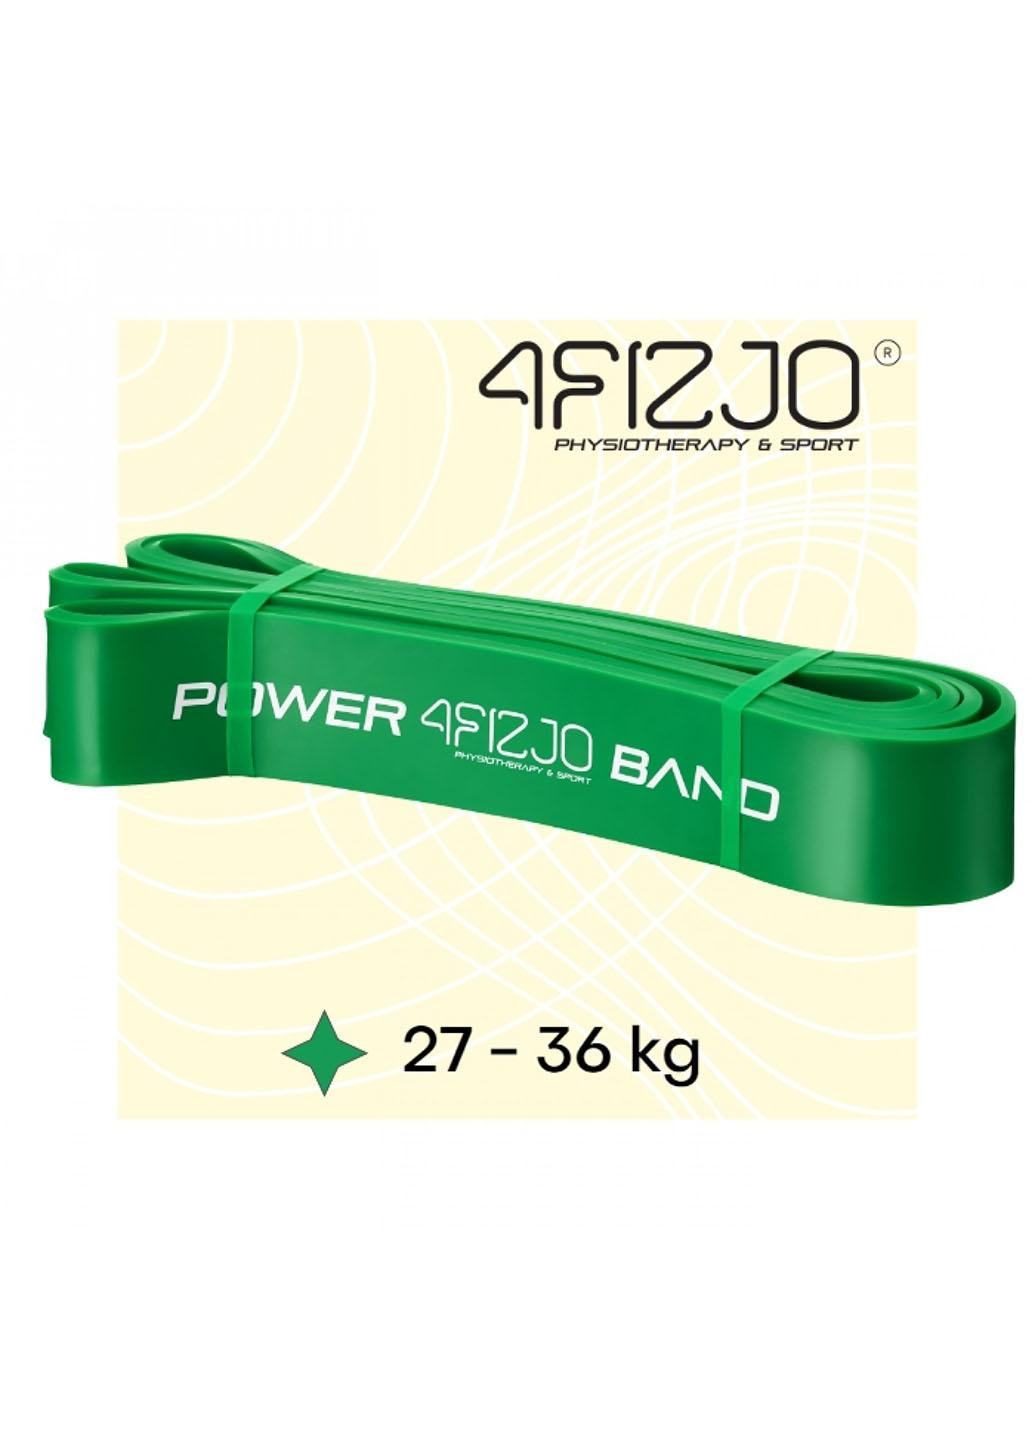 Эспандер-петля Power Band 45 мм 26-36 кг (резина для фитнеса и спорта) 4FJ1080 4FIZJO (260043699)